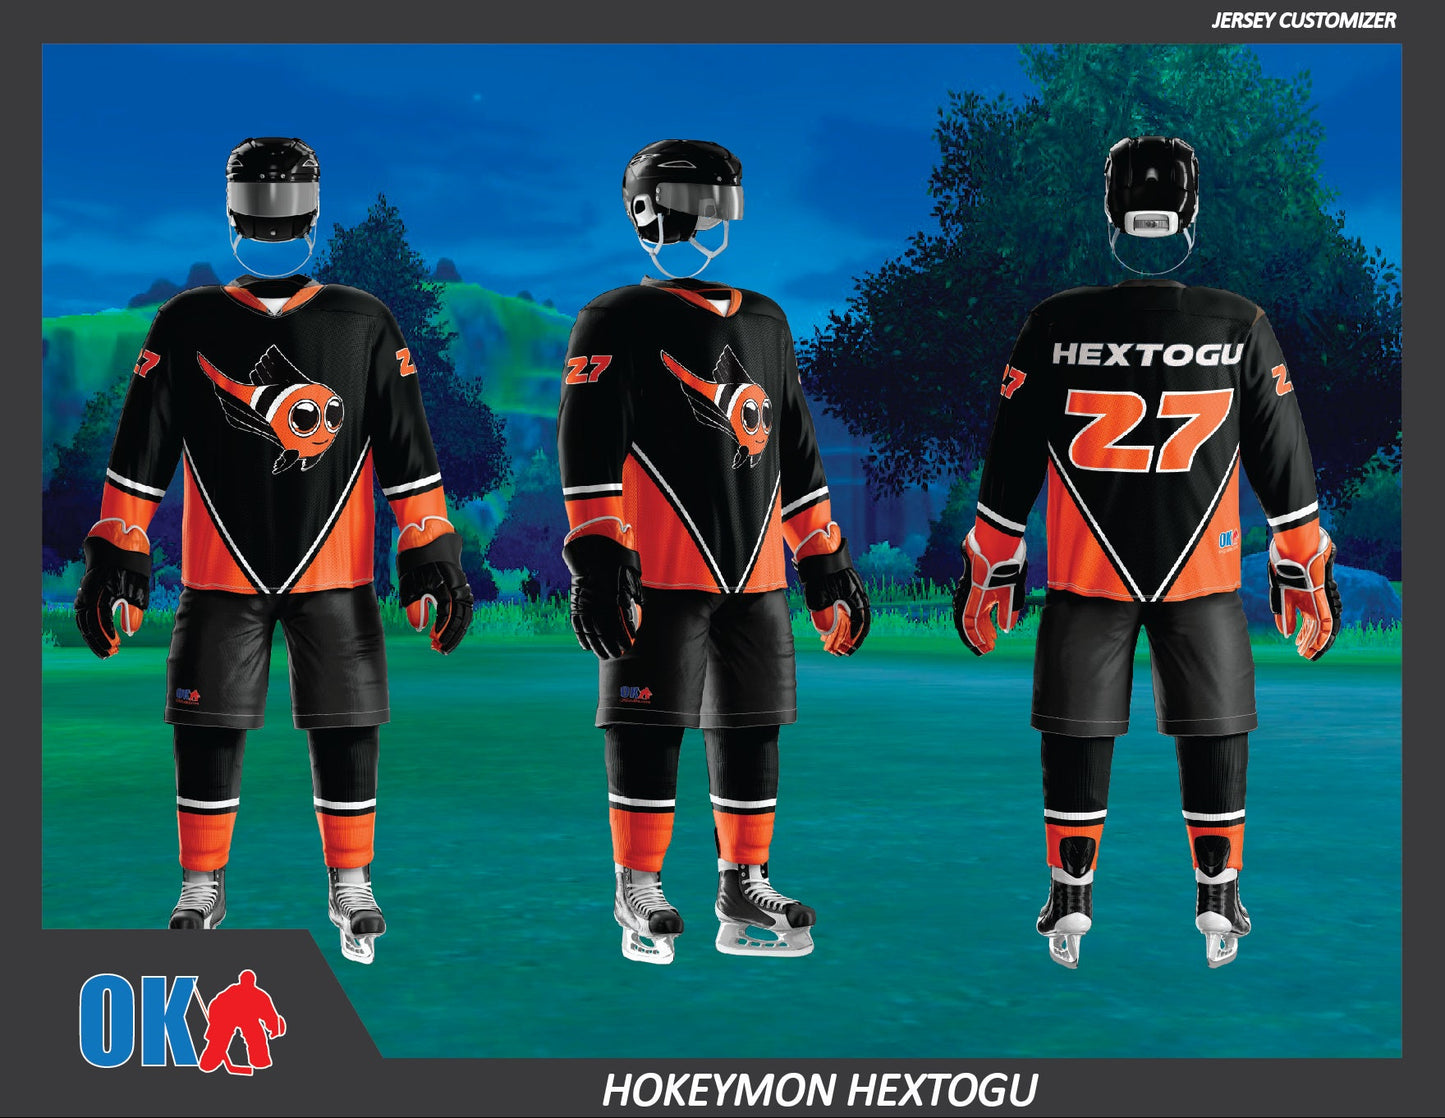 Hextogu Hokeymon Hockey Jersey